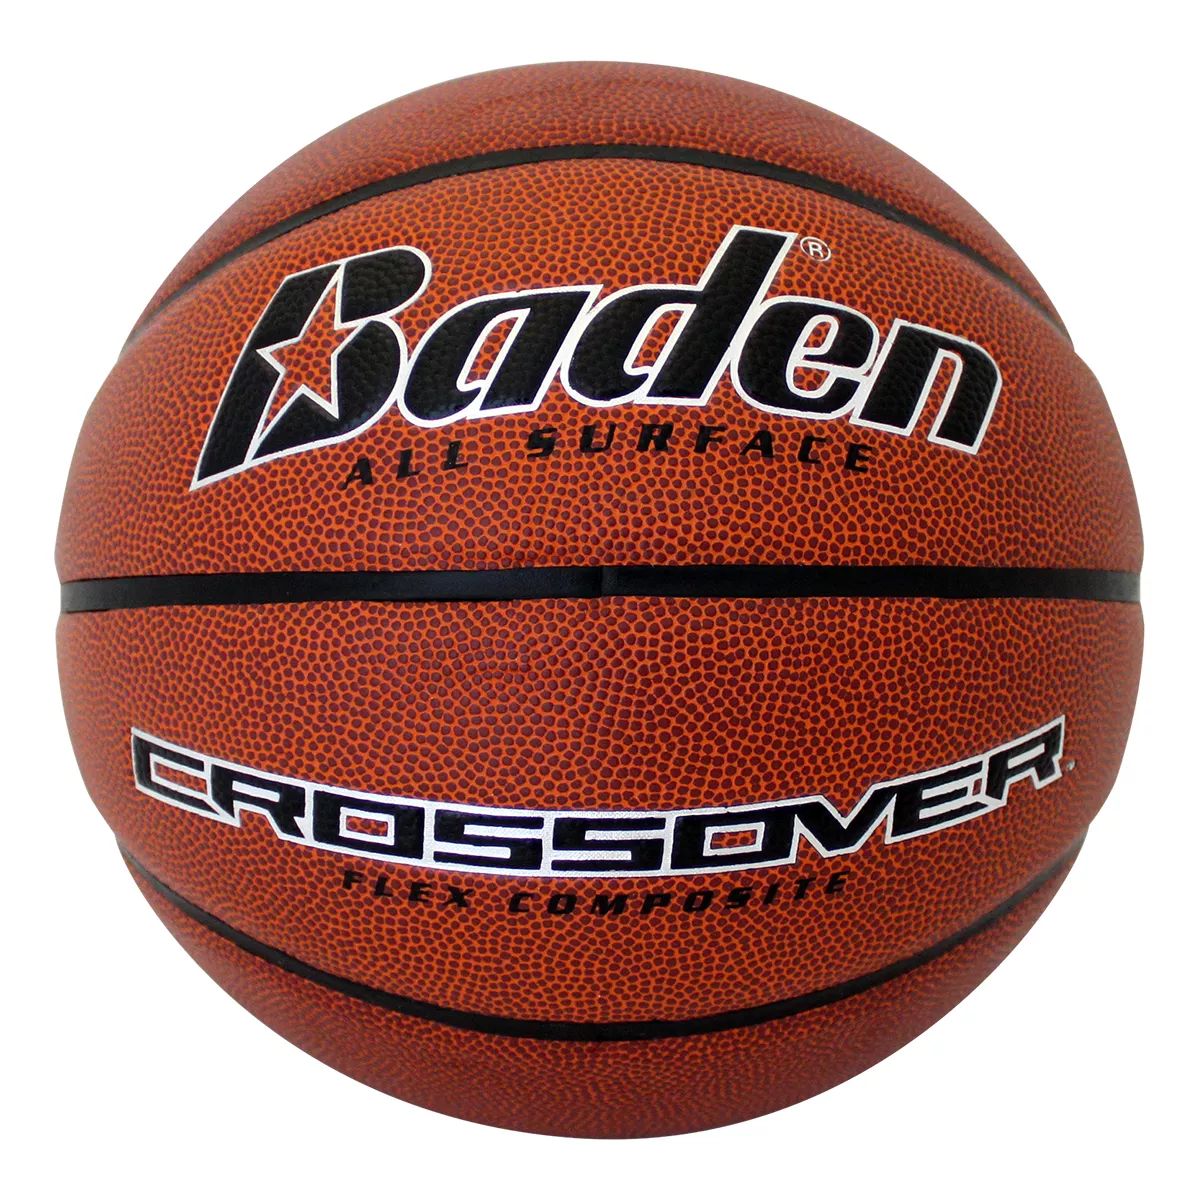 Image of Baden Crossover Flex Composite Basketball - Size 6